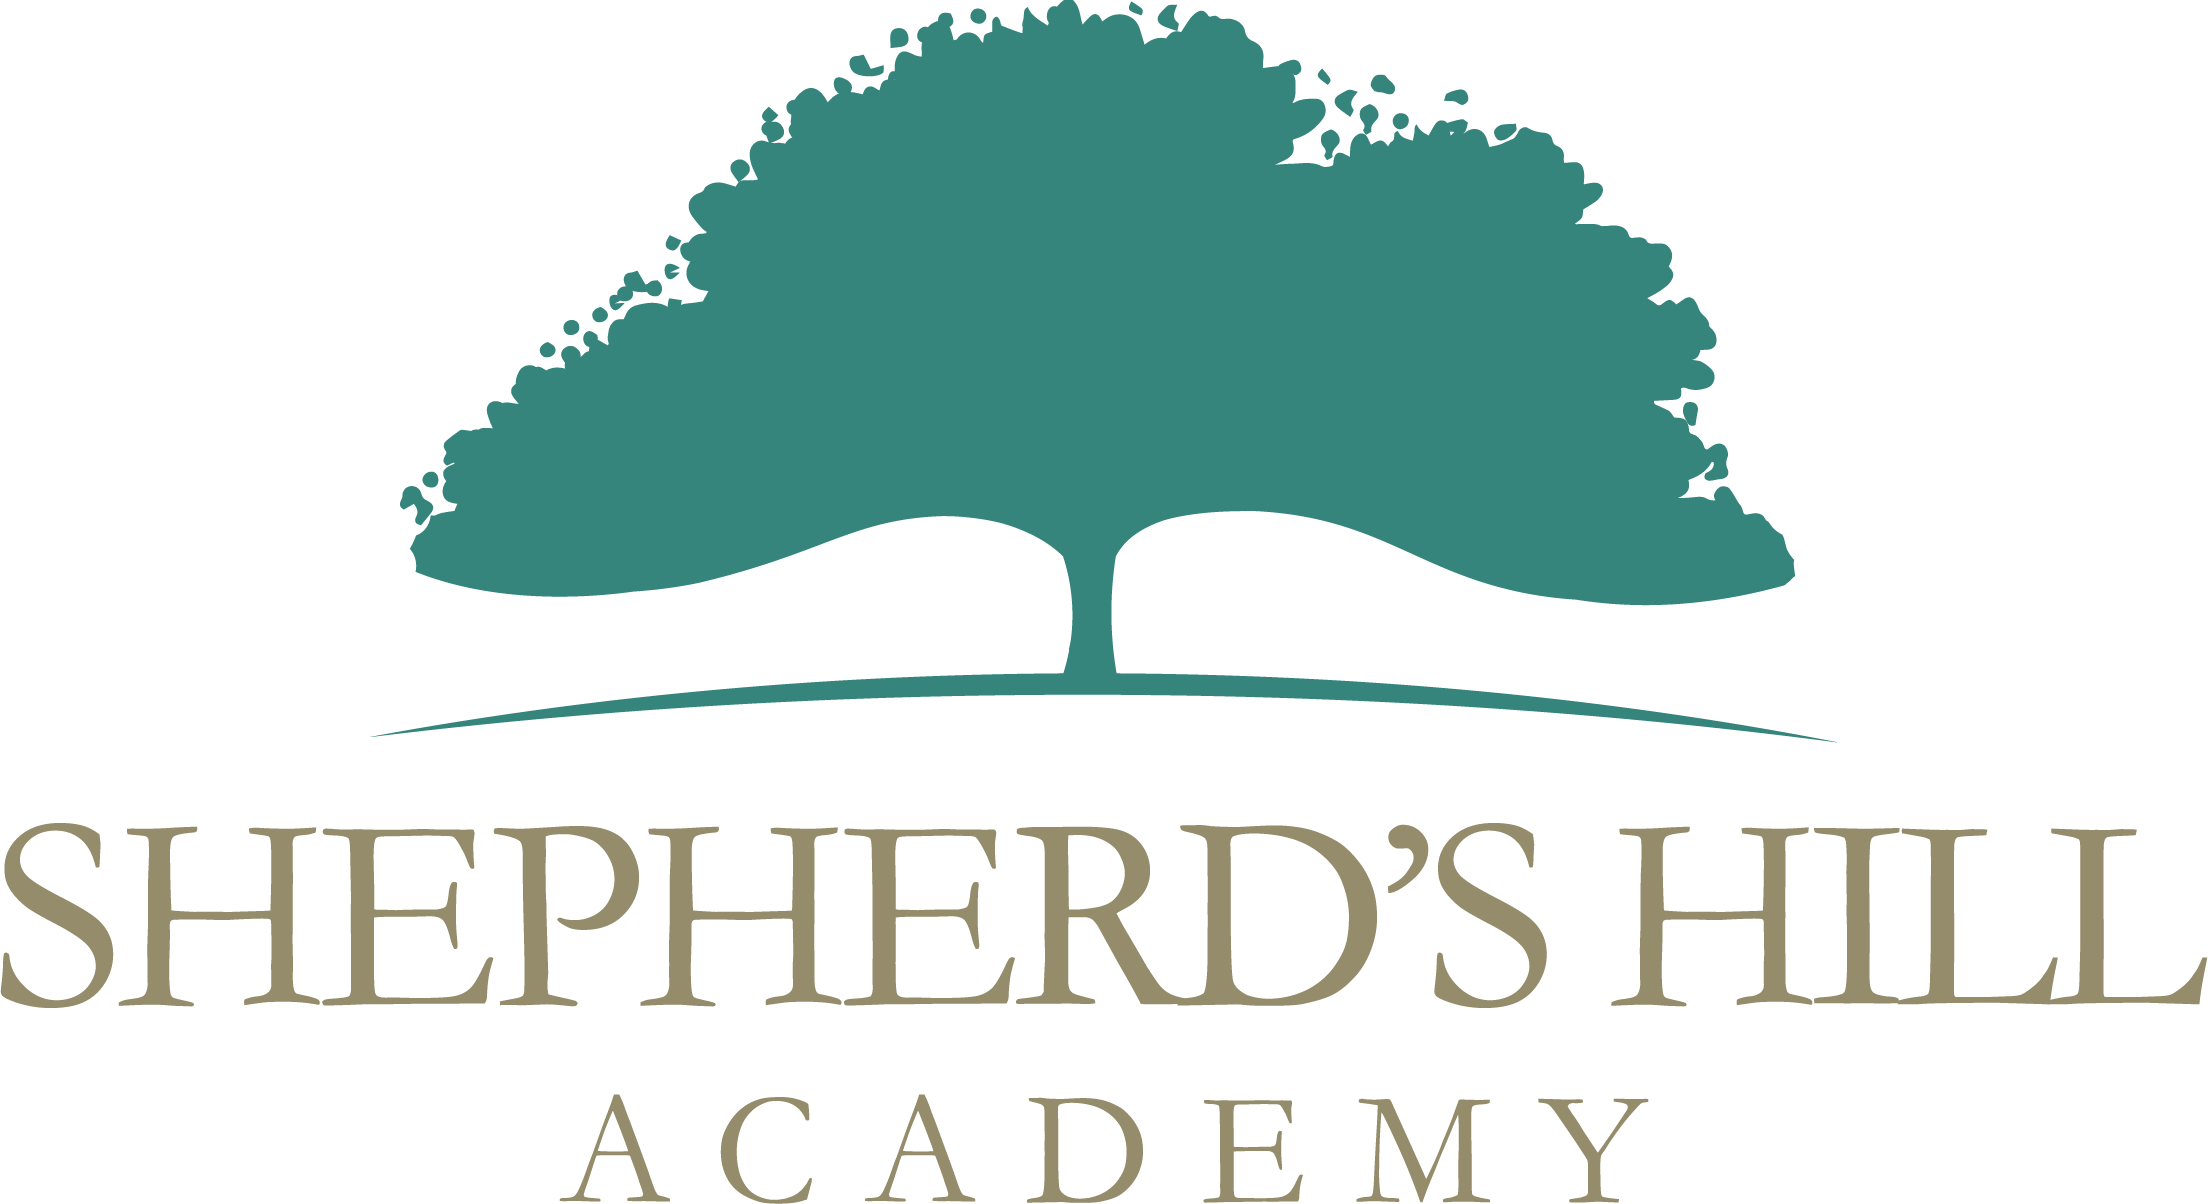 Shepherds Hill Academy logo